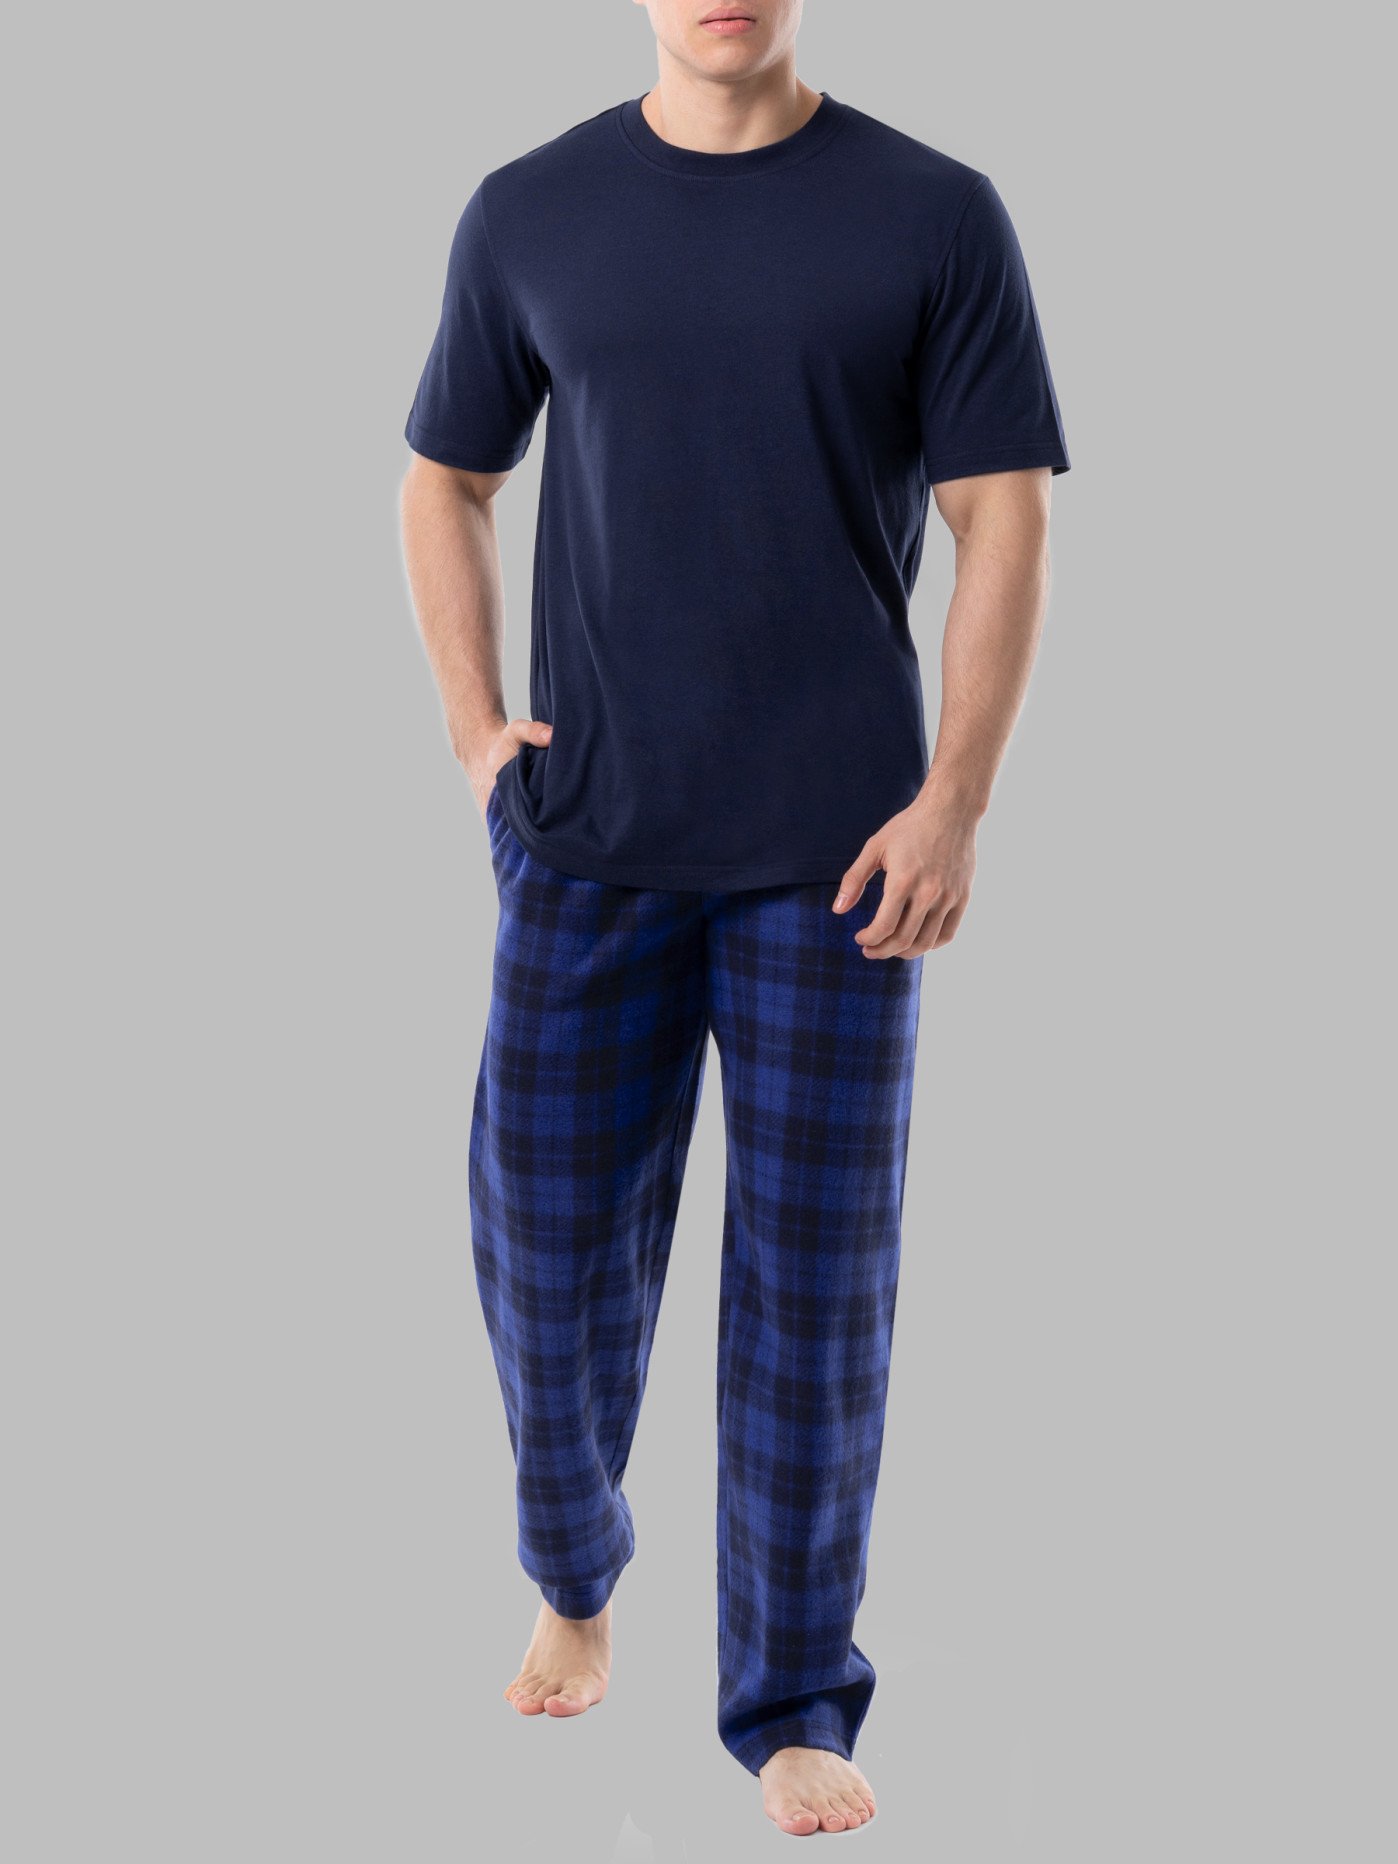 Blue Plaid Plaid Pajama Pant for Men Lounge Sleep Pants Mens